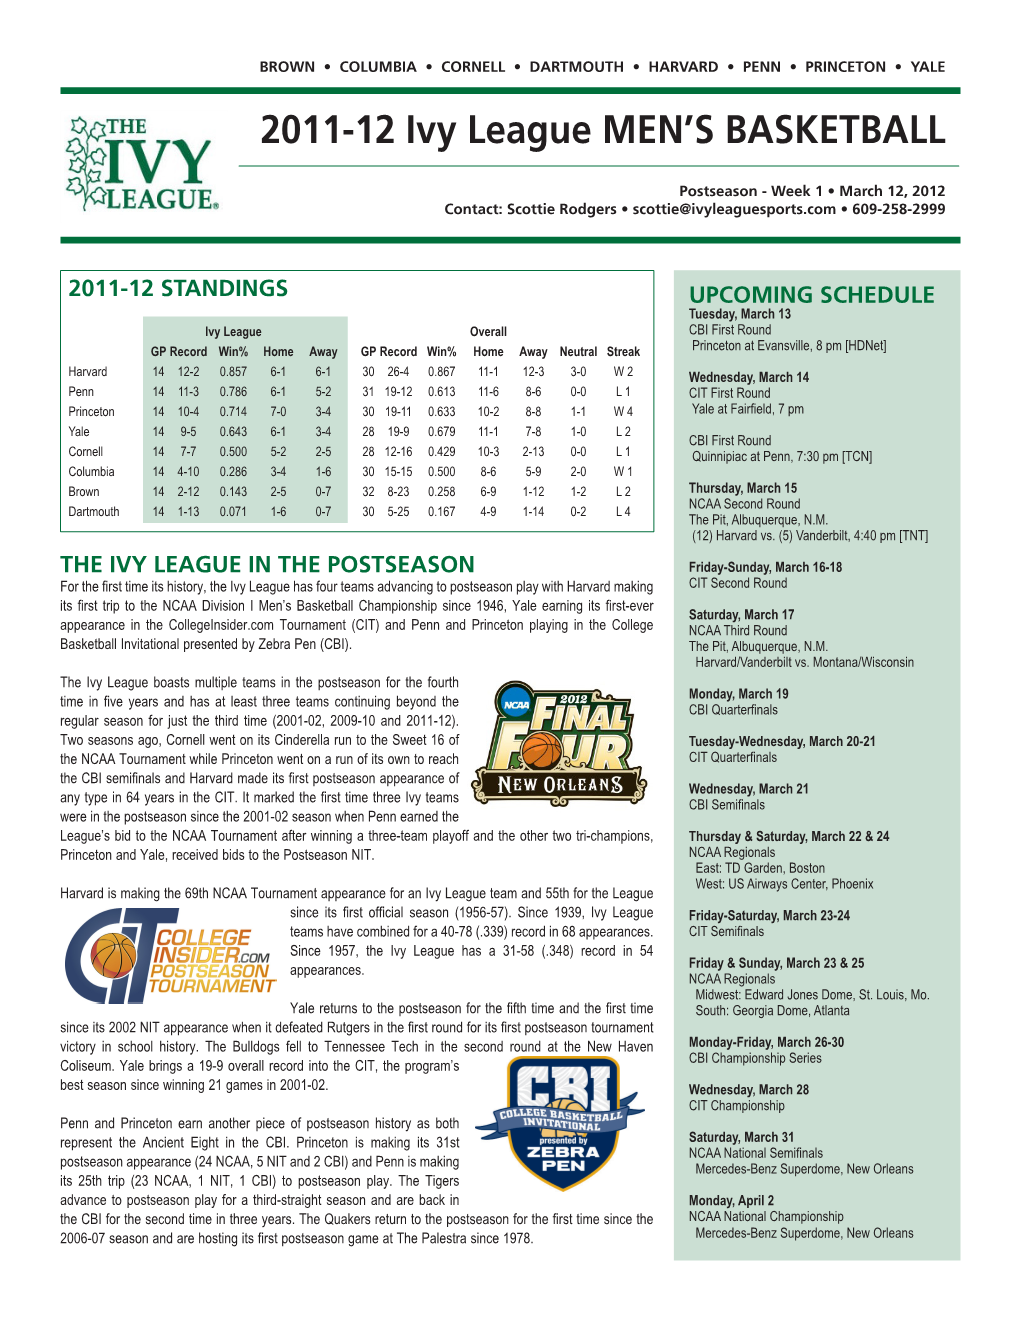 2011-12 Ivy League Men's Basketball INDIVIDUAL BASKETBALL STATISTICS Through Games of Mar 06, 2012 (All Games)